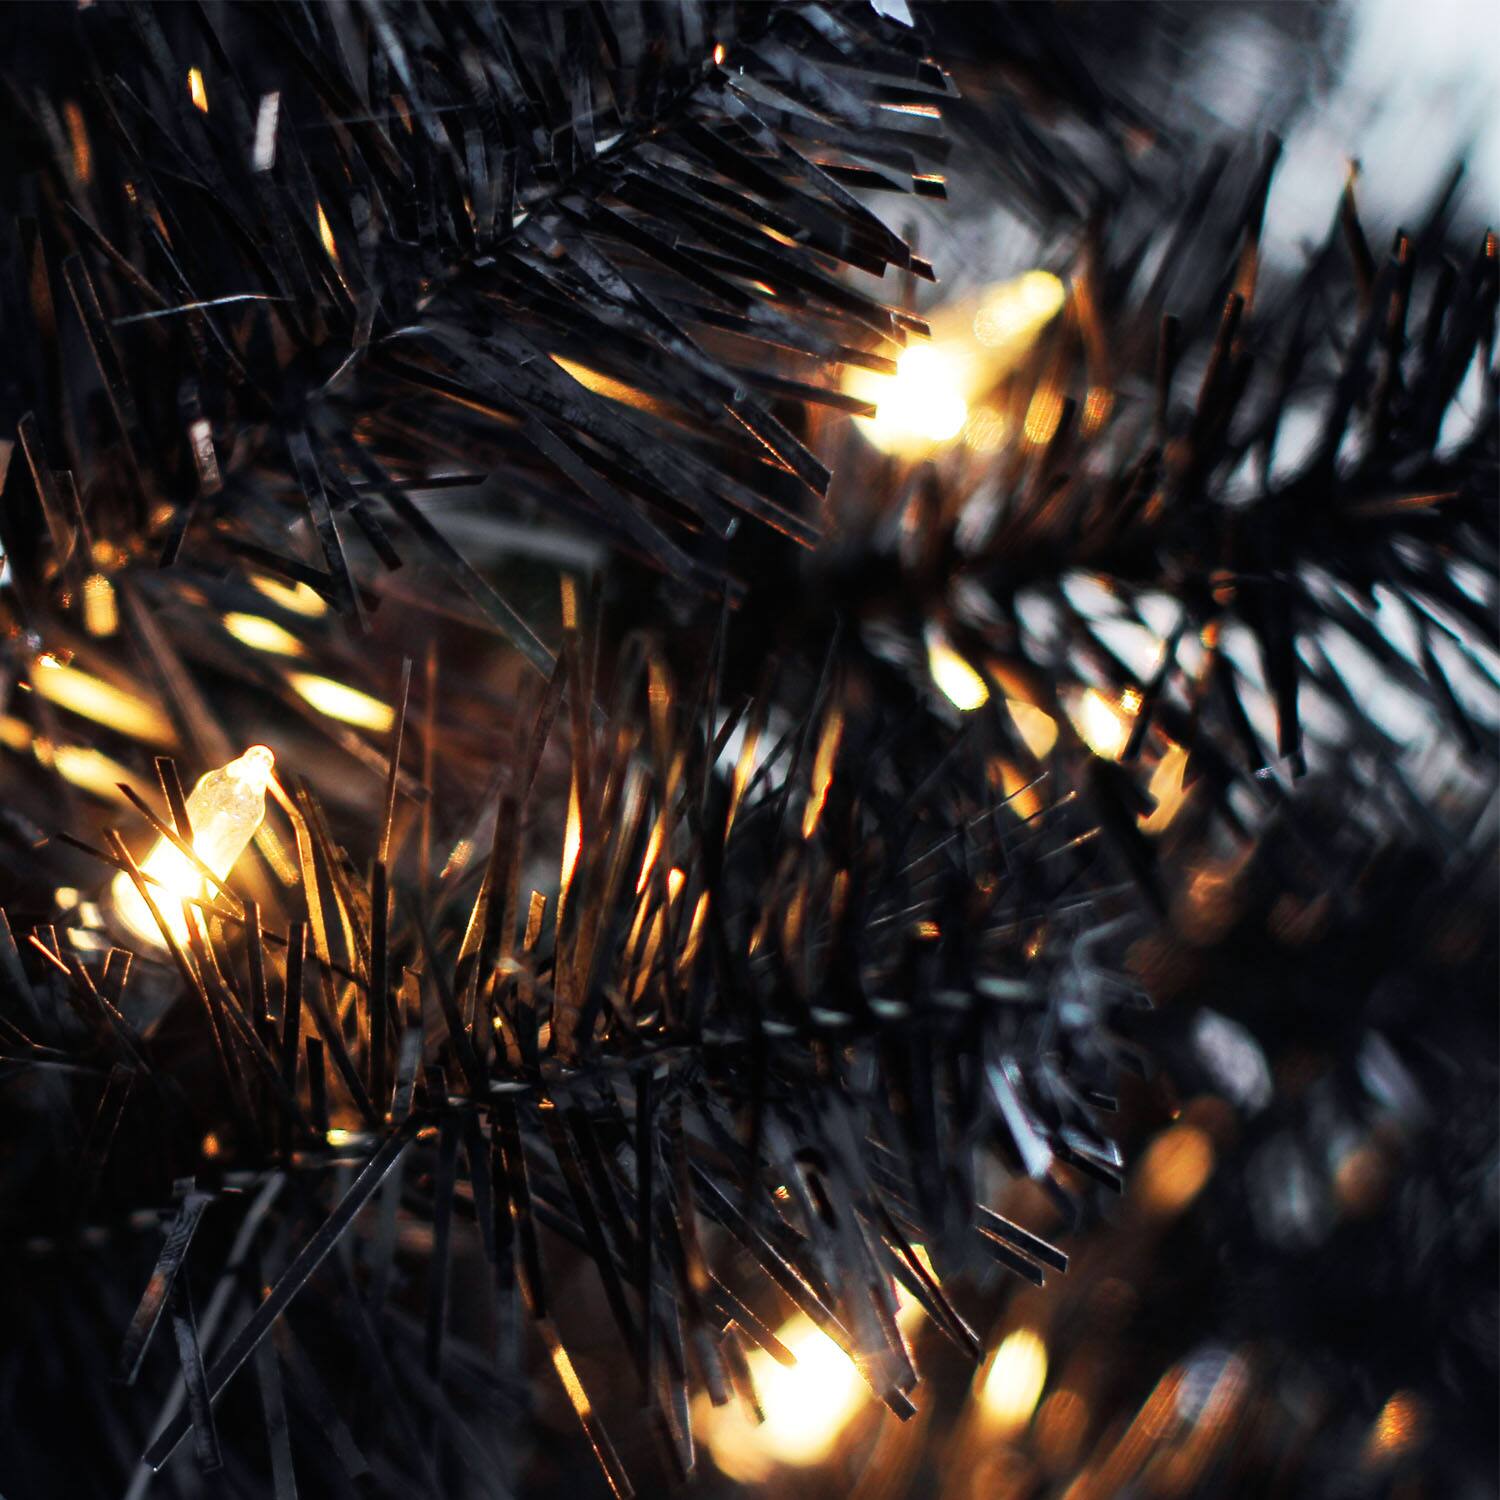 black christmas tree with lights